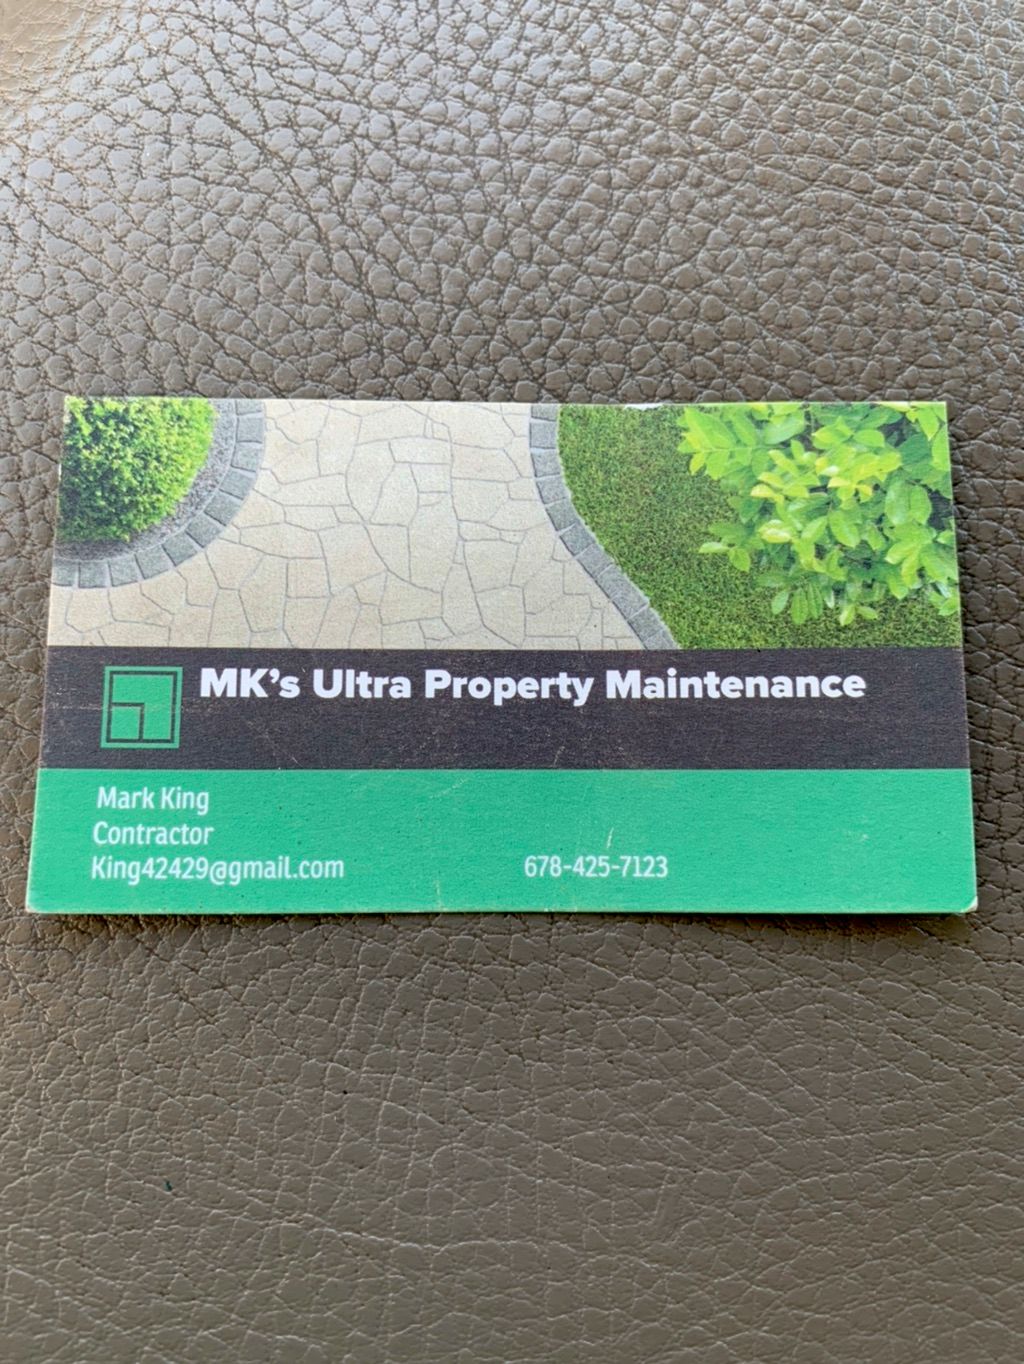 MK’s Ultra Property Maintenance